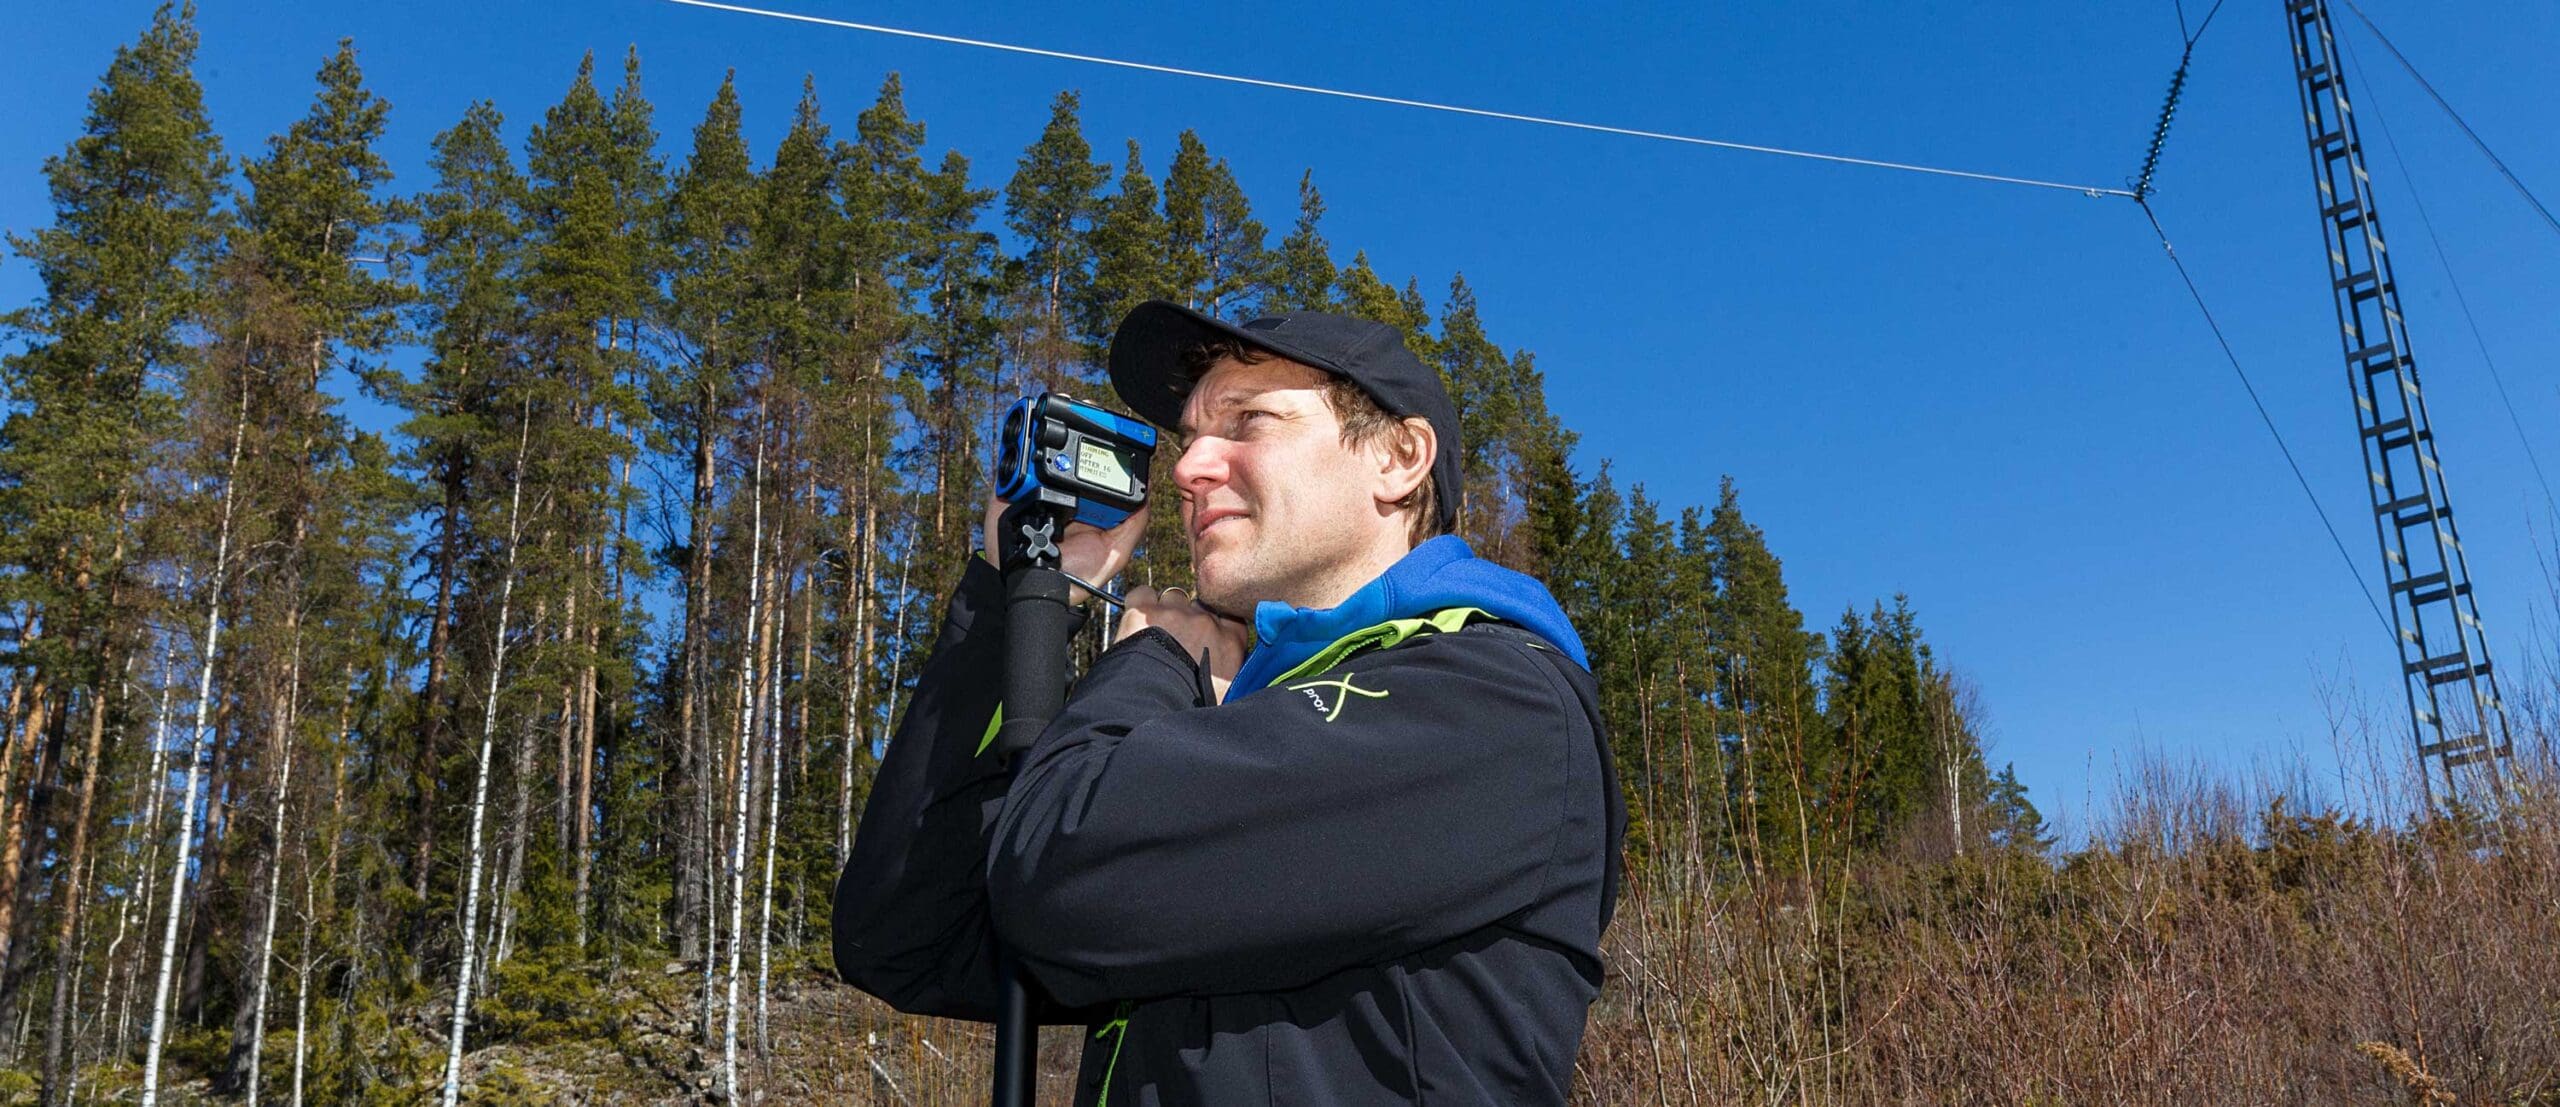 Tree surveyor using a Haglof Laser Geo device